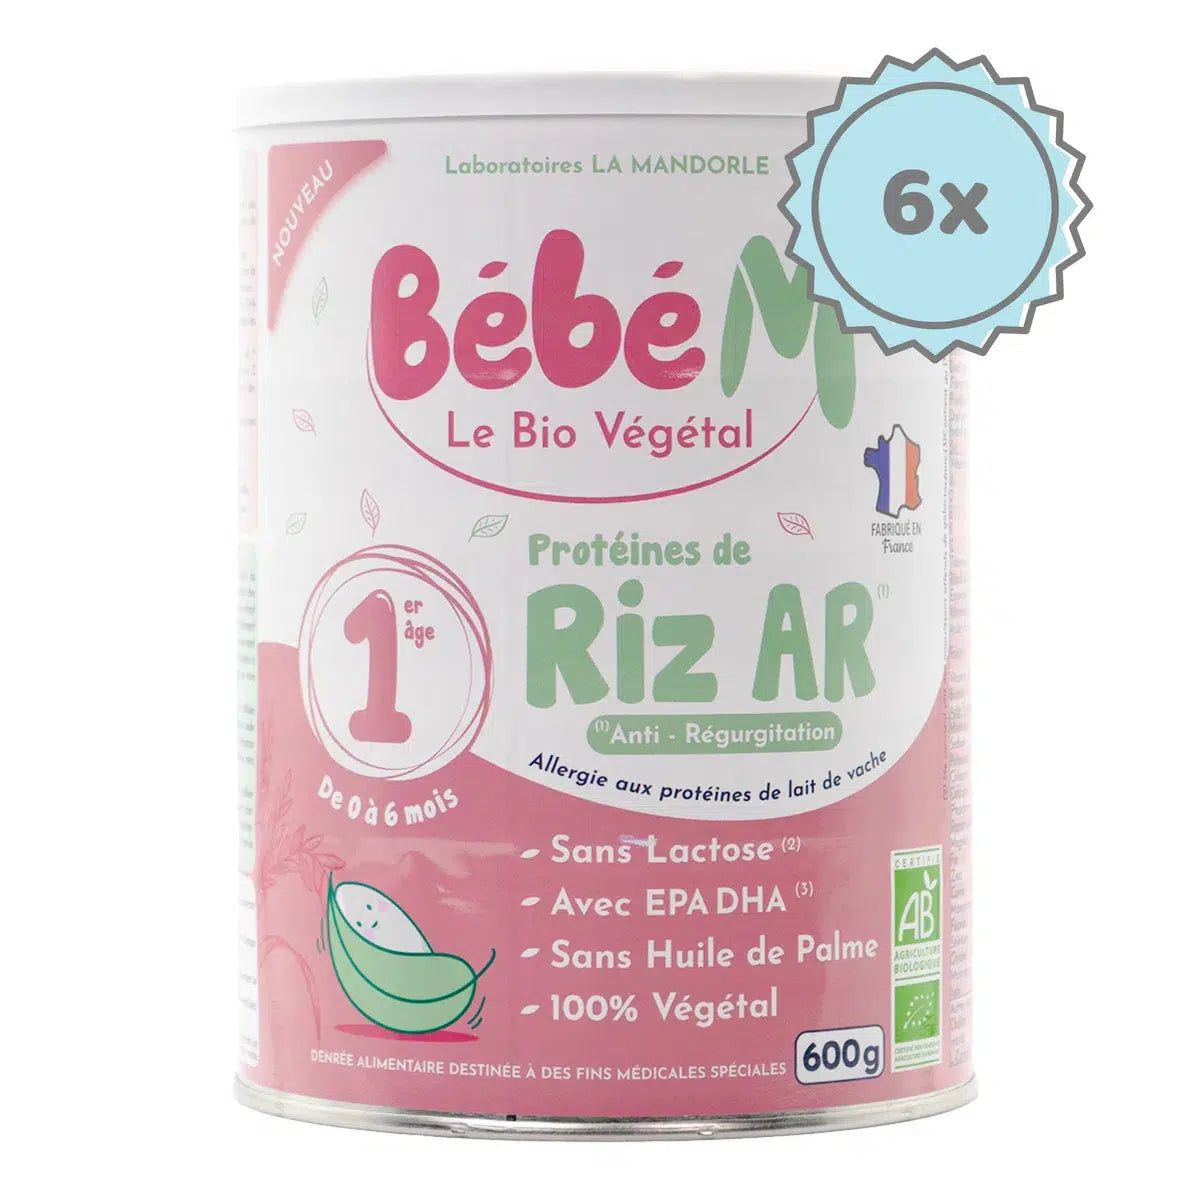 Bebe M (Bebe Mandorle) Organic Anti-Reflux Rice-Based Infant Formula - Stage 1 (0 to 6 months) | Organic Baby Formula | 6 cans